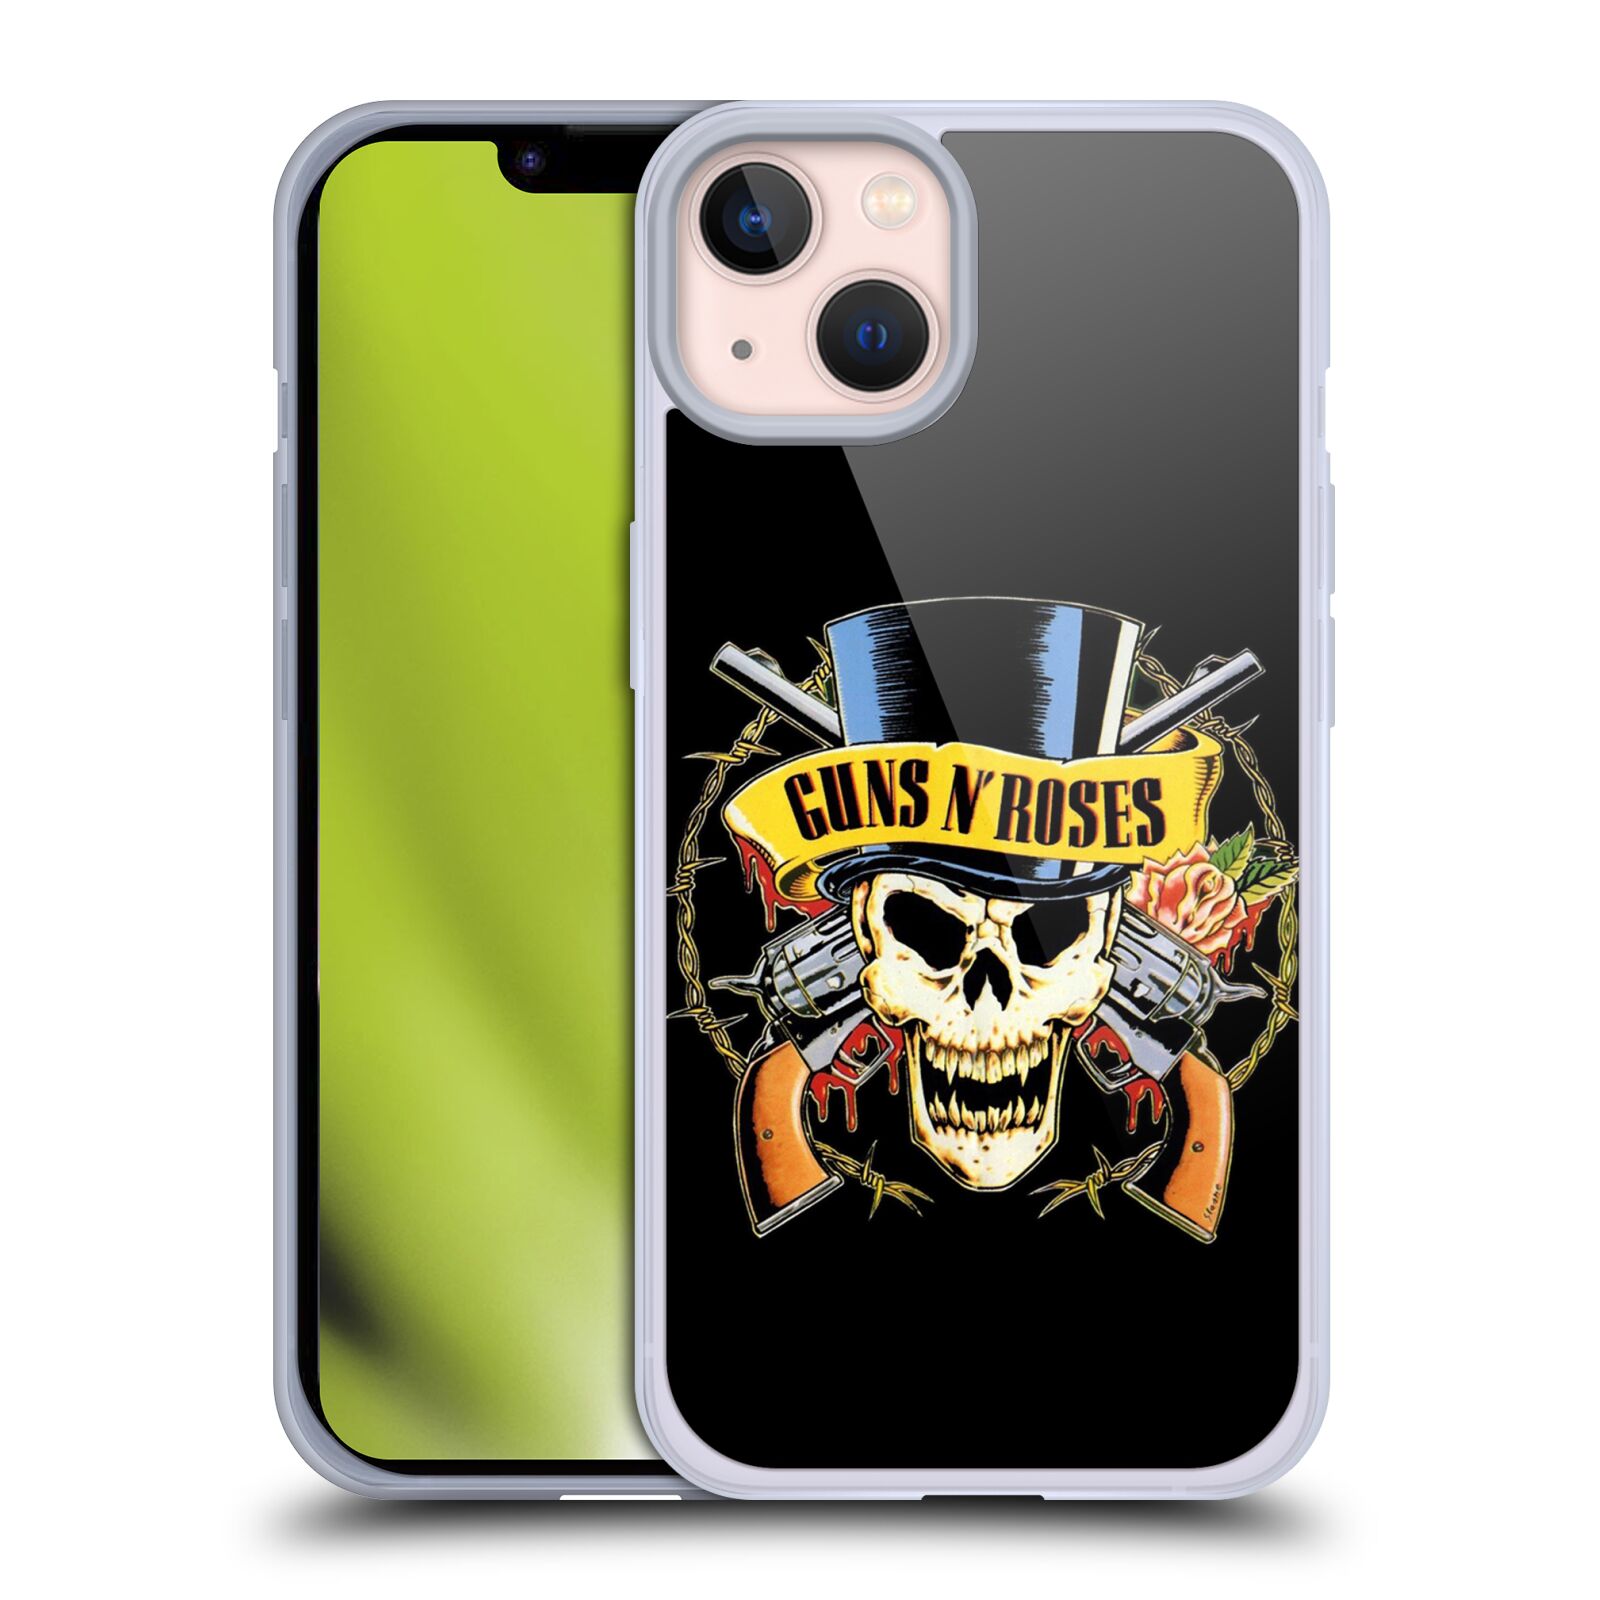 Silikonové pouzdro na mobil Apple iPhone 13 - Head Case - Guns N' Roses - Lebka - AKCE (Silikonový kryt, obal, pouzdro na mobilní telefon Apple iPhone 13 s motivem Guns N' Roses - Lebka)